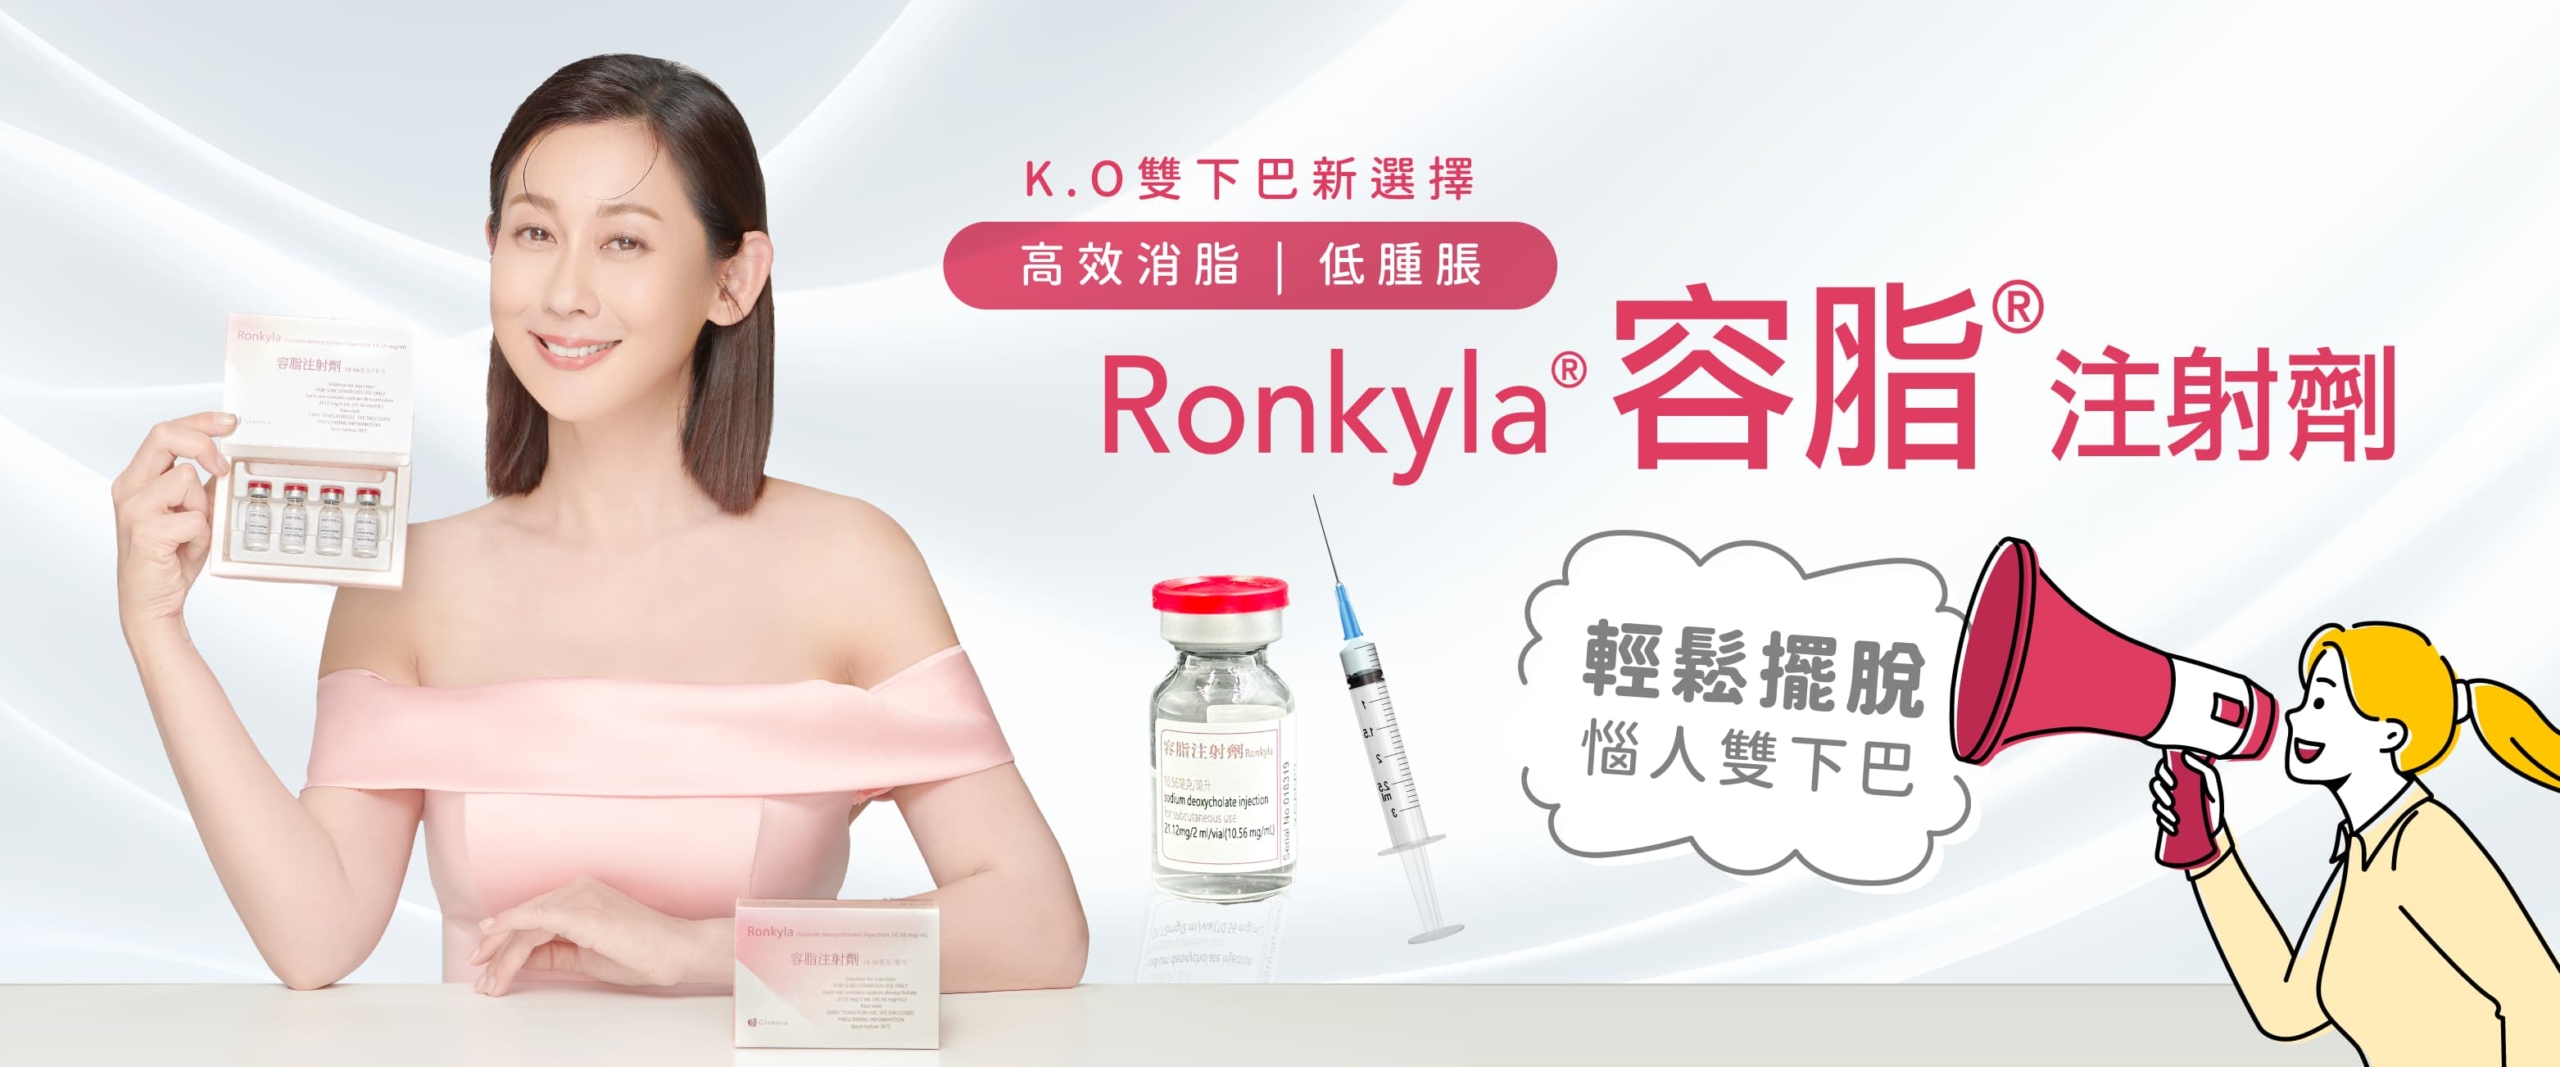 Ronkyla溶脂針(容脂注射劑)-新一代台灣溶脂針、KO雙下巴低腫脹